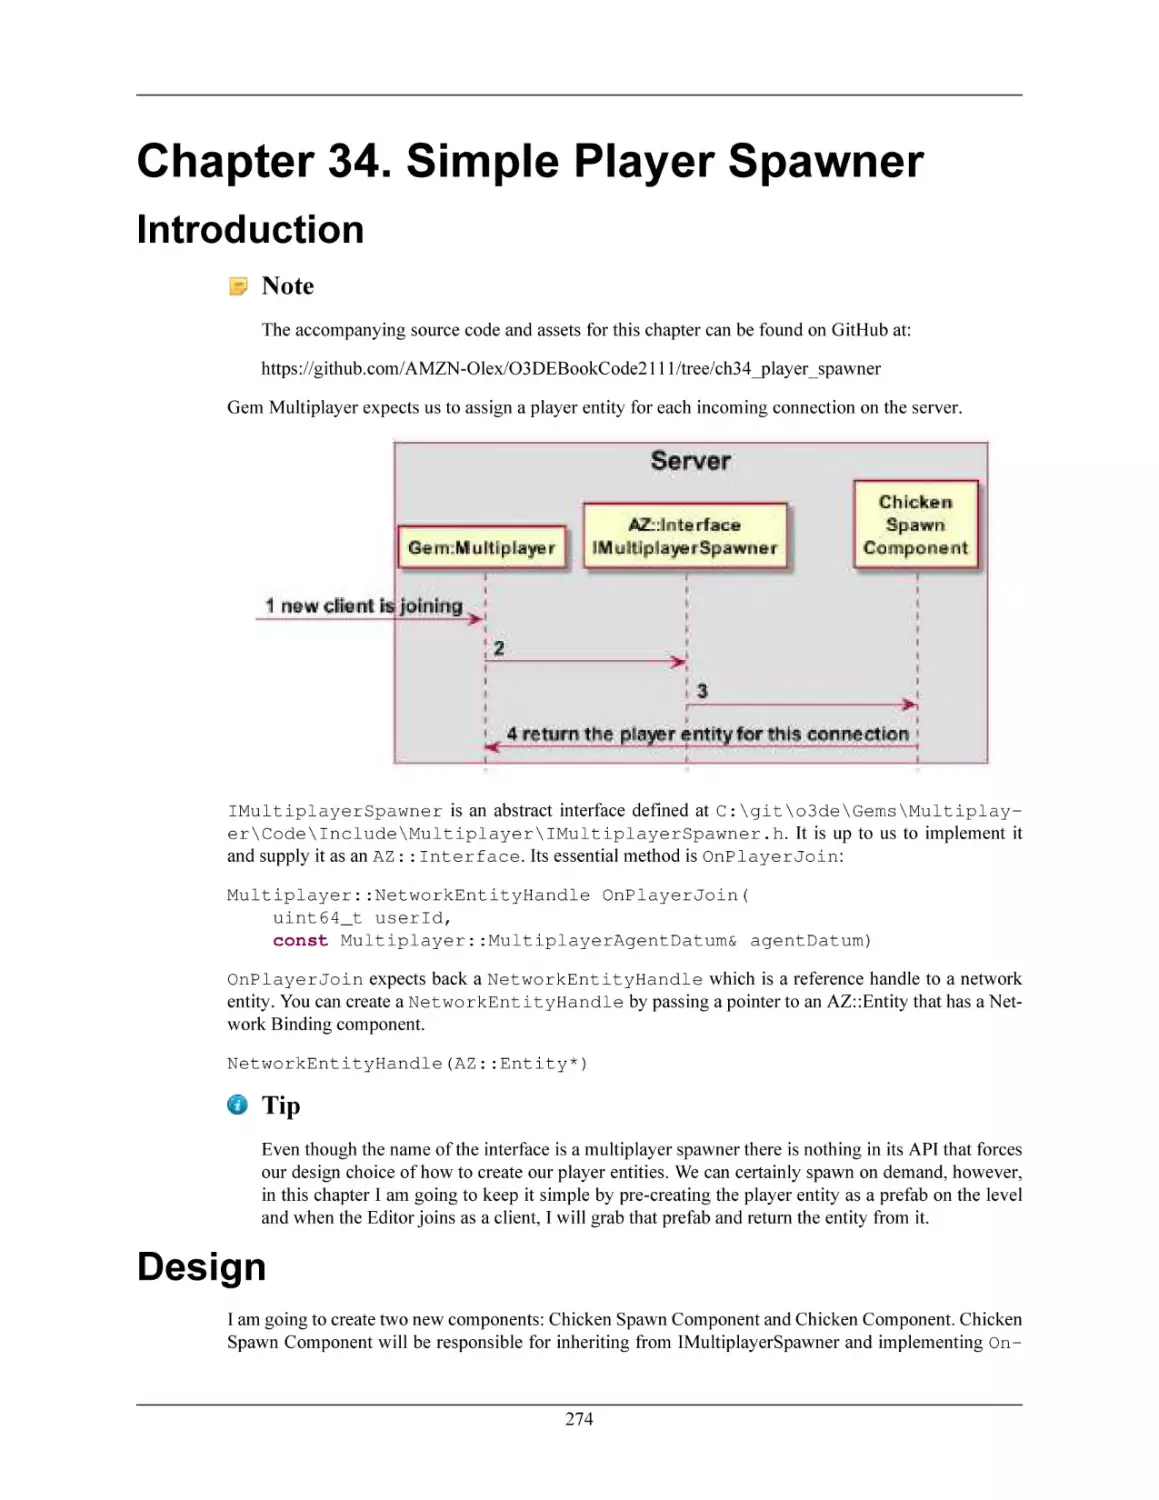 Chapter 34. Simple Player Spawner
Introduction
Design